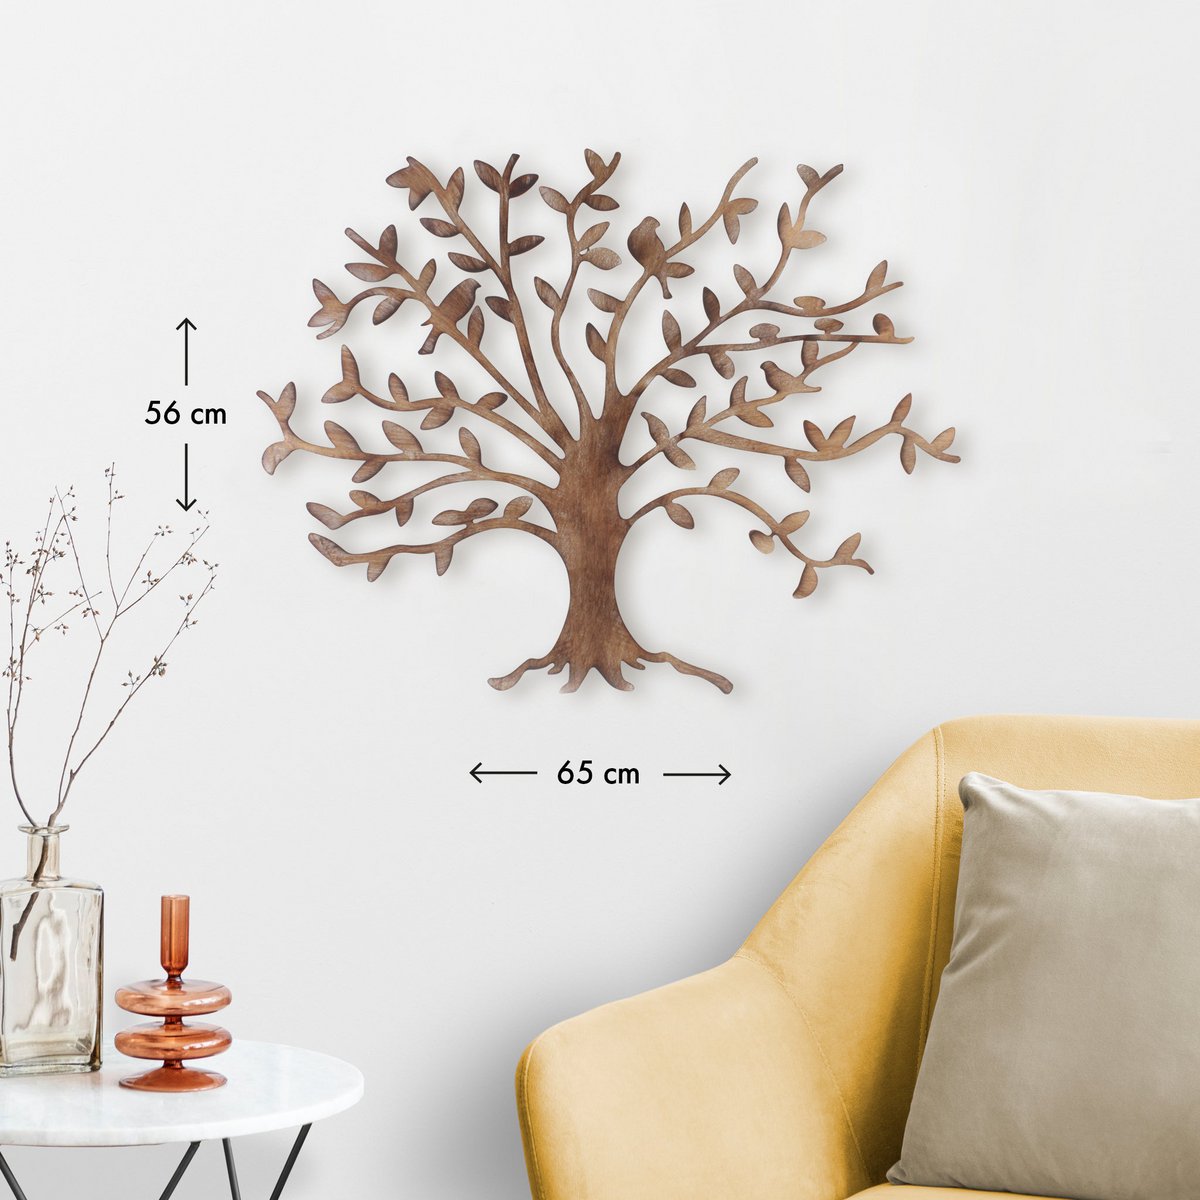 Tree of Friendship - 65x56 cm